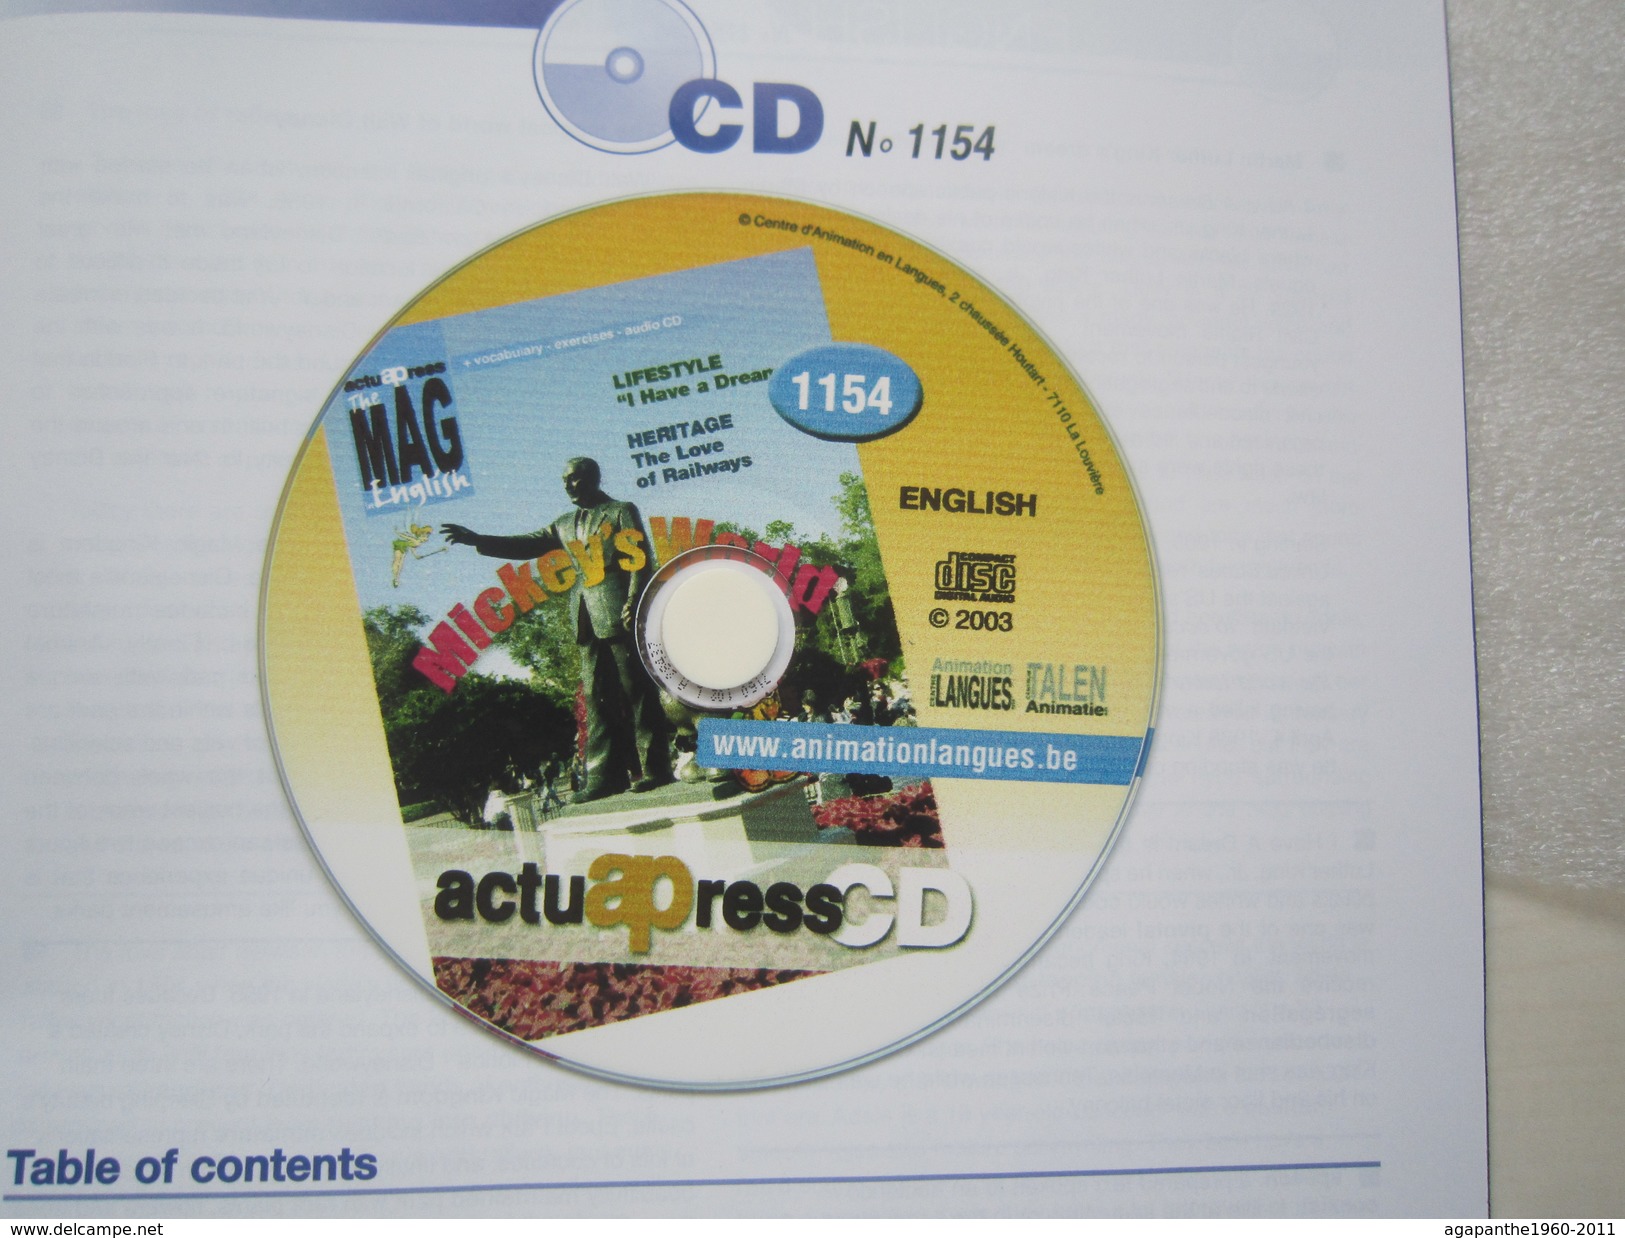 060 - ActuAPress The MAG In ENGLISH  N° 1154 - 2008-05 - MENSUEL  +  CD AUDIO - Education/ Teaching